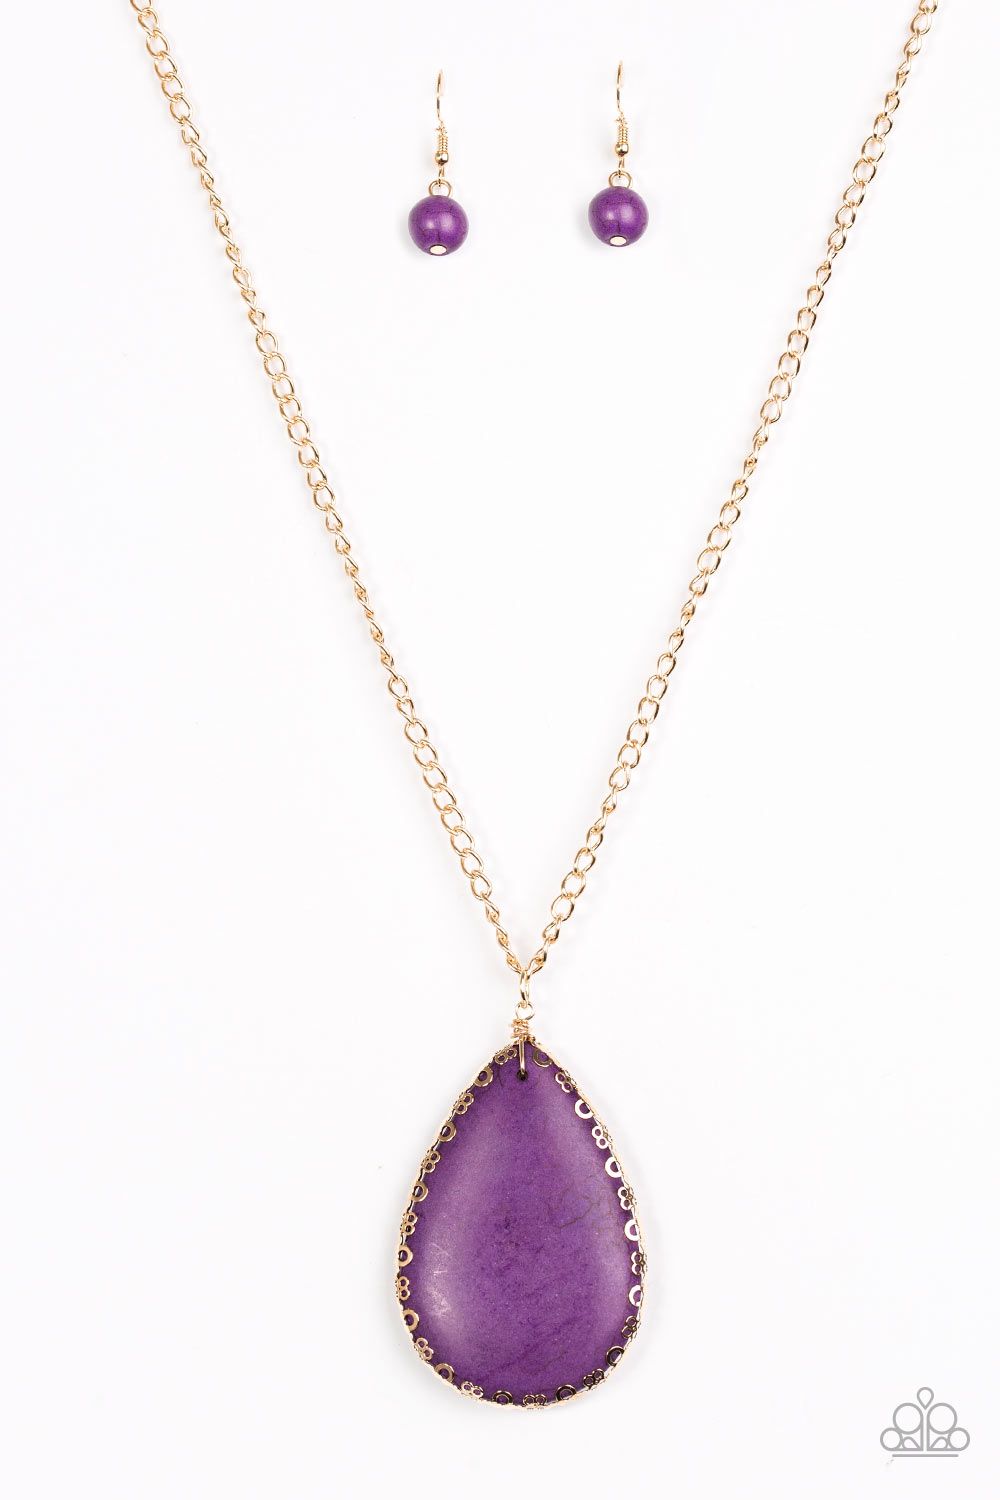 Paparazzi Accessories  - Stone Magnificence #N752 Peg - Purple Necklace